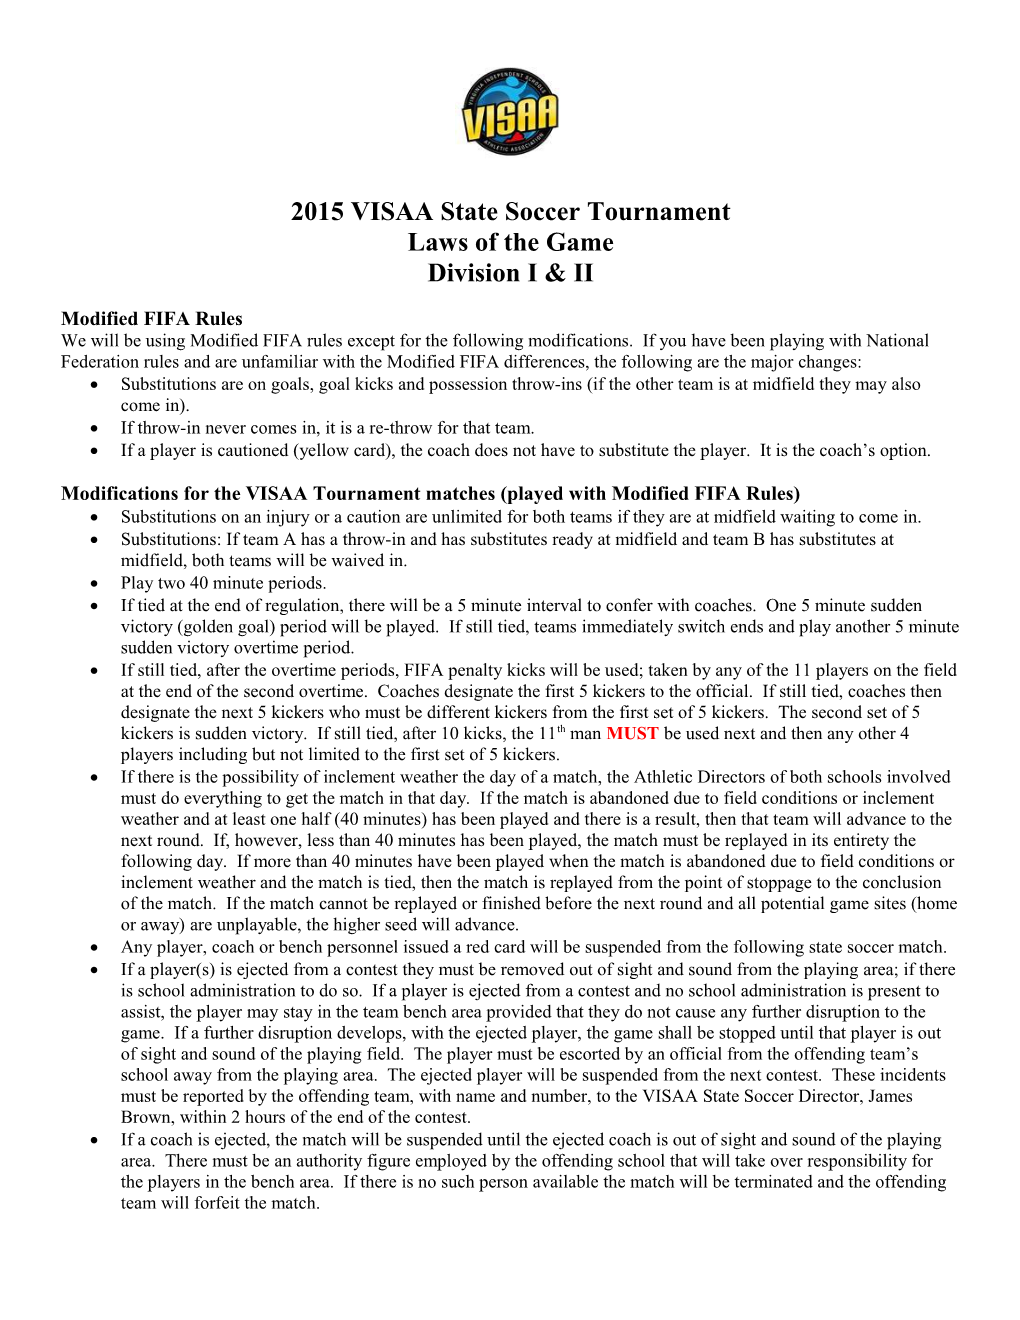 2009 VISAA State Soccer Tournament